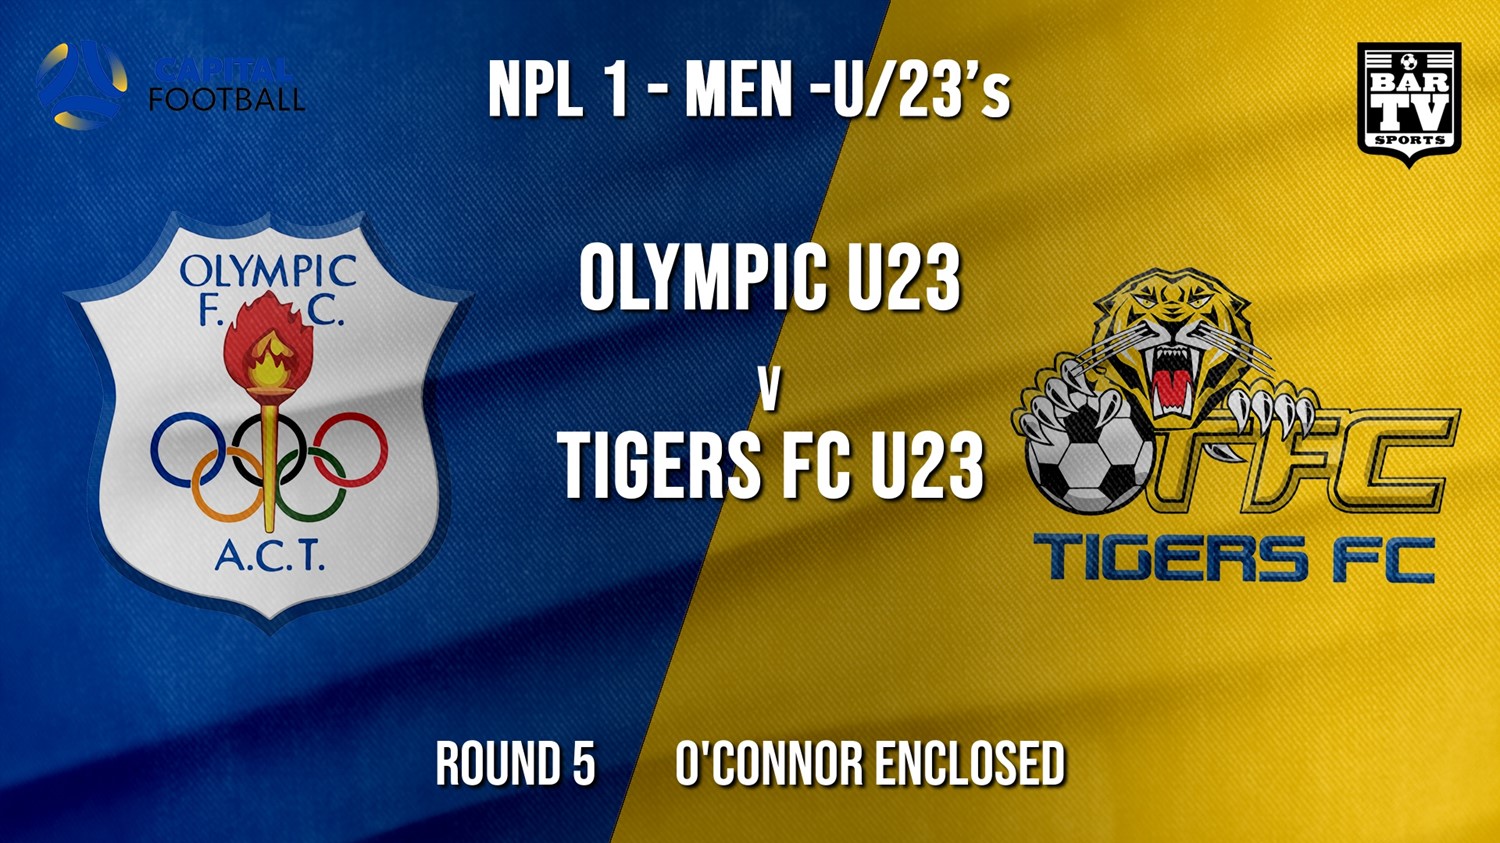 NPL1 Men - U23 - Capital Football  Round 5 - Canberra Olympic U23 v Tigers FC U23 Minigame Slate Image